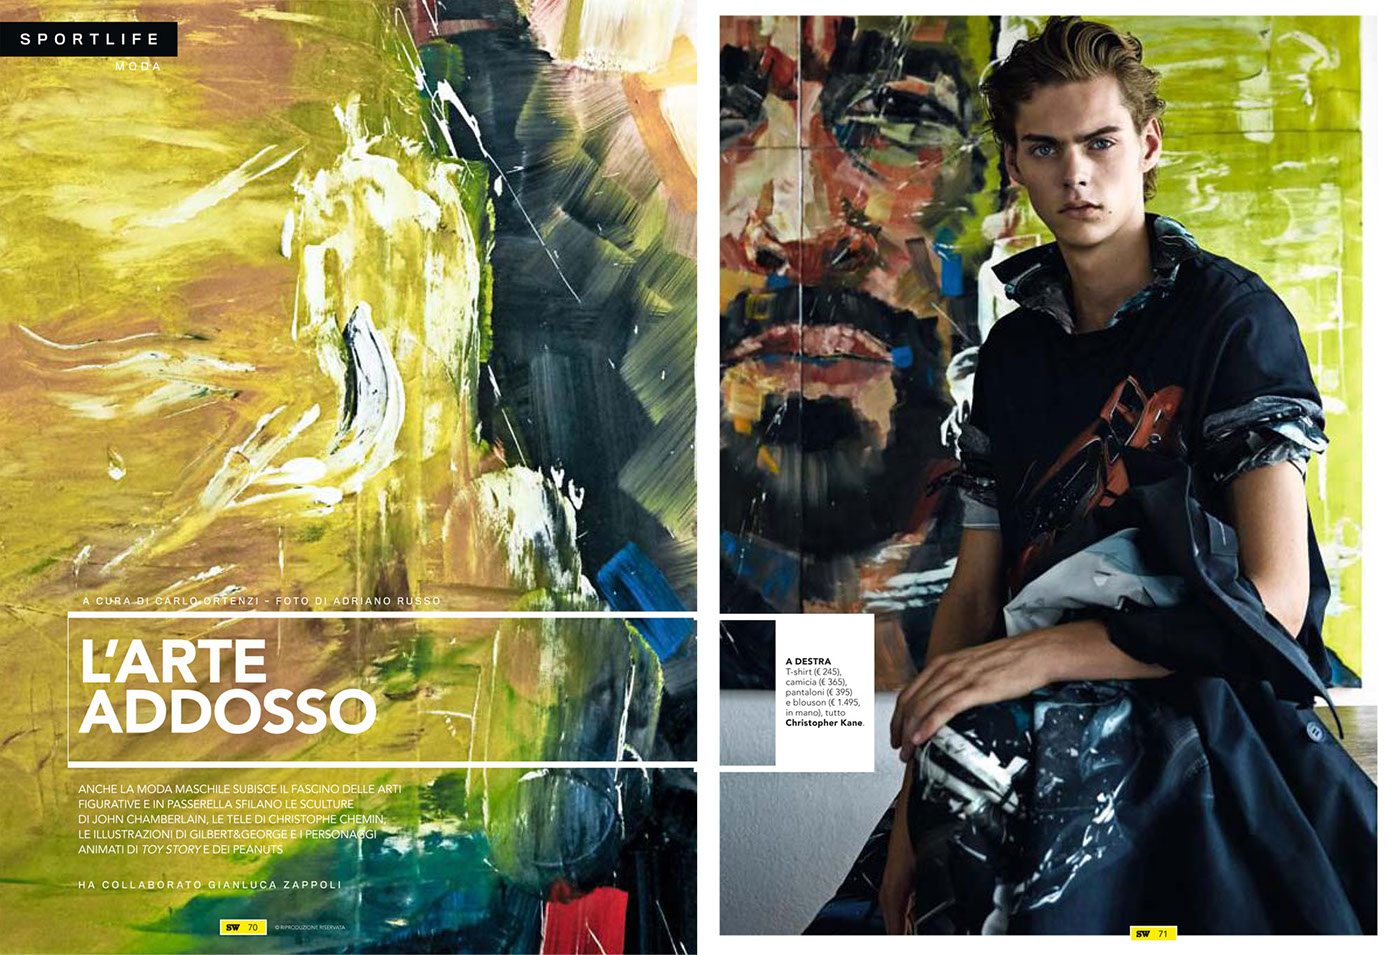 Mimmo Di Maggio editorial magazine model men sport week Carlo Ortenzi Gianluca Zappoli grooming